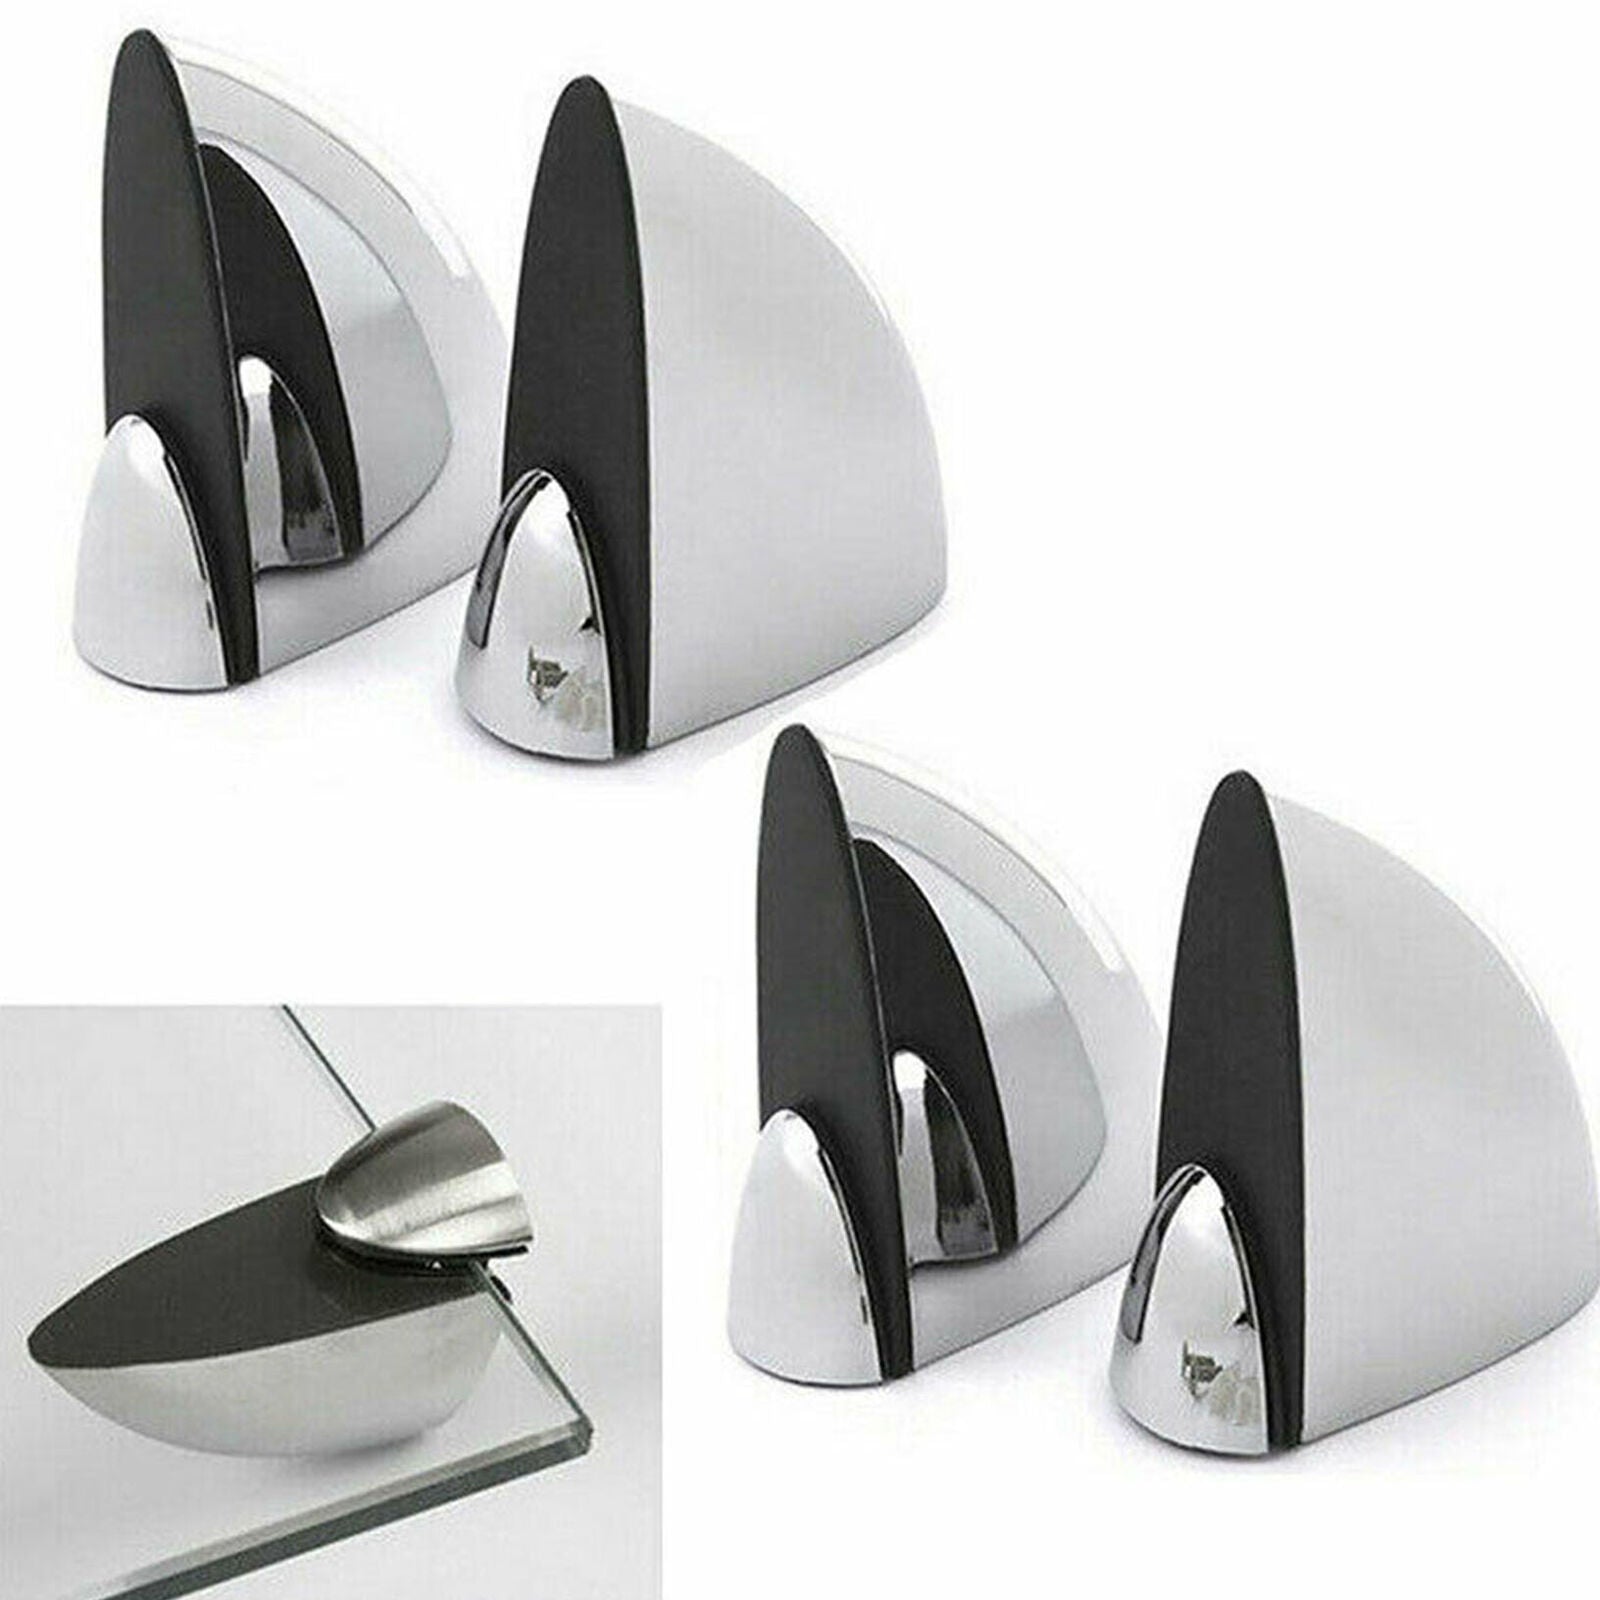 4Pcs Polished Chrome Glass Shelf Support Clamp Brackets Set Bathroom For Shelves